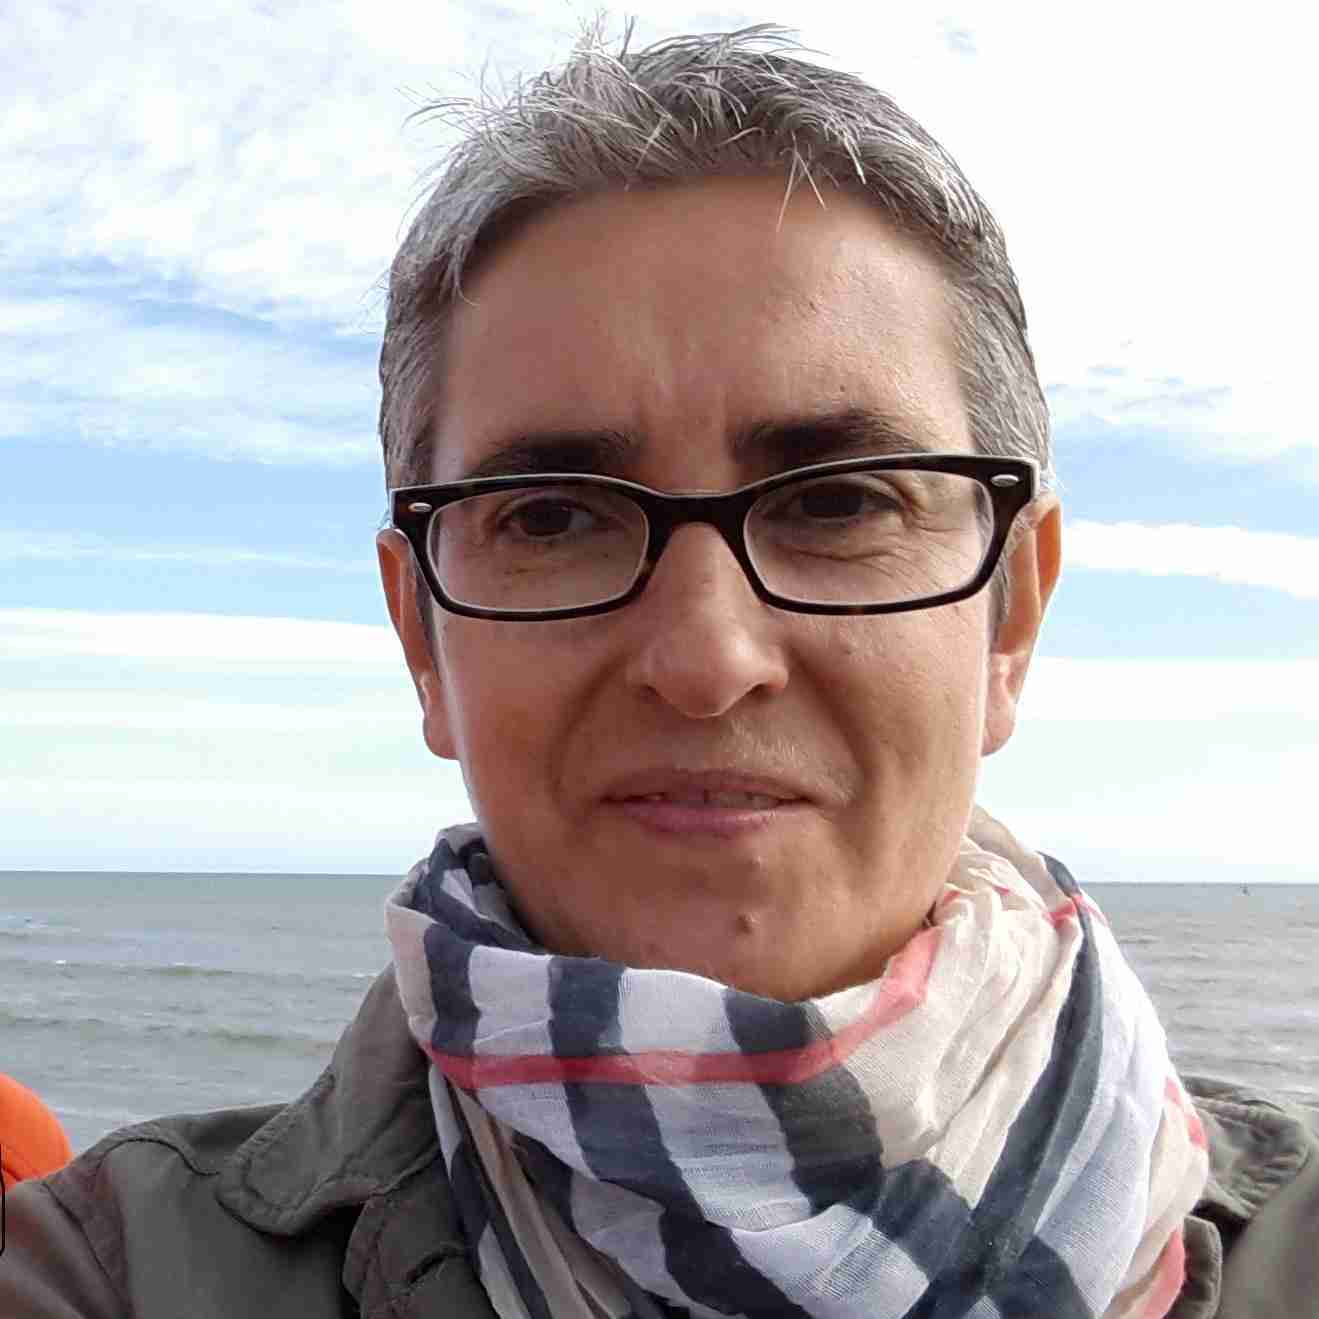 Profile image of Professor Giovanna Bermano